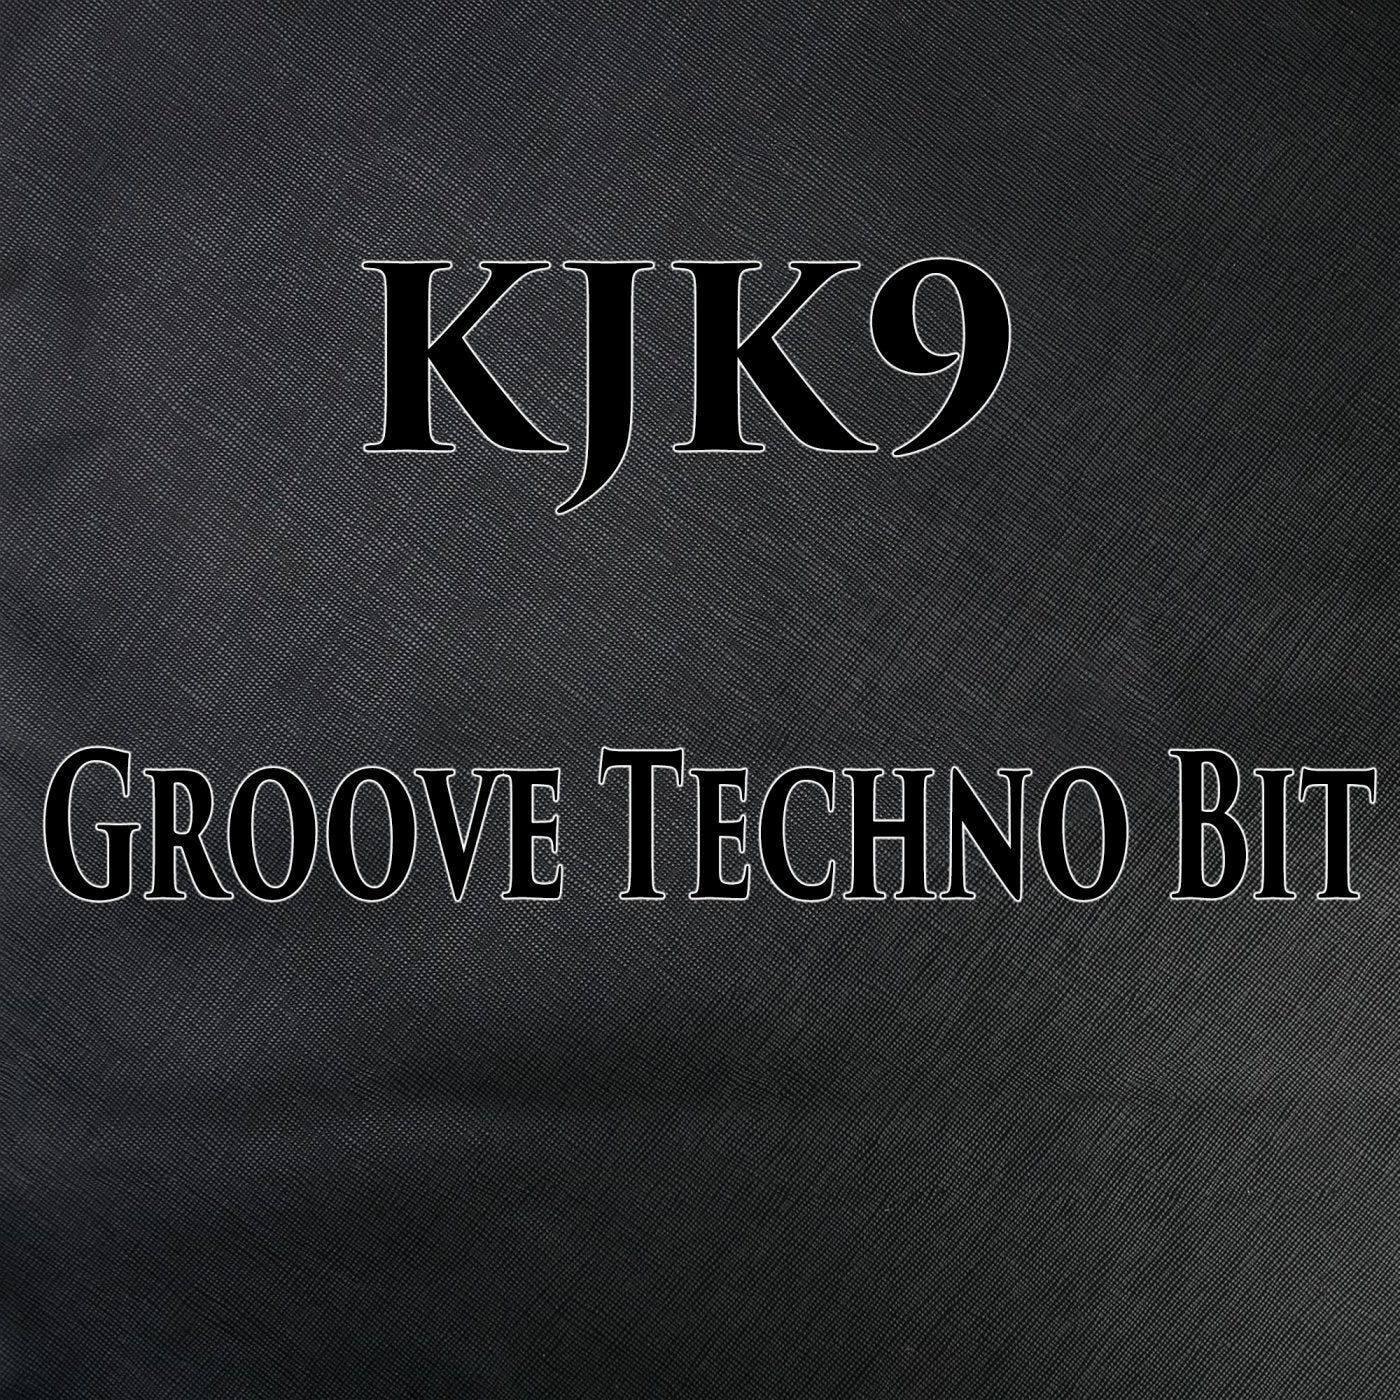 Groove Techno Bit